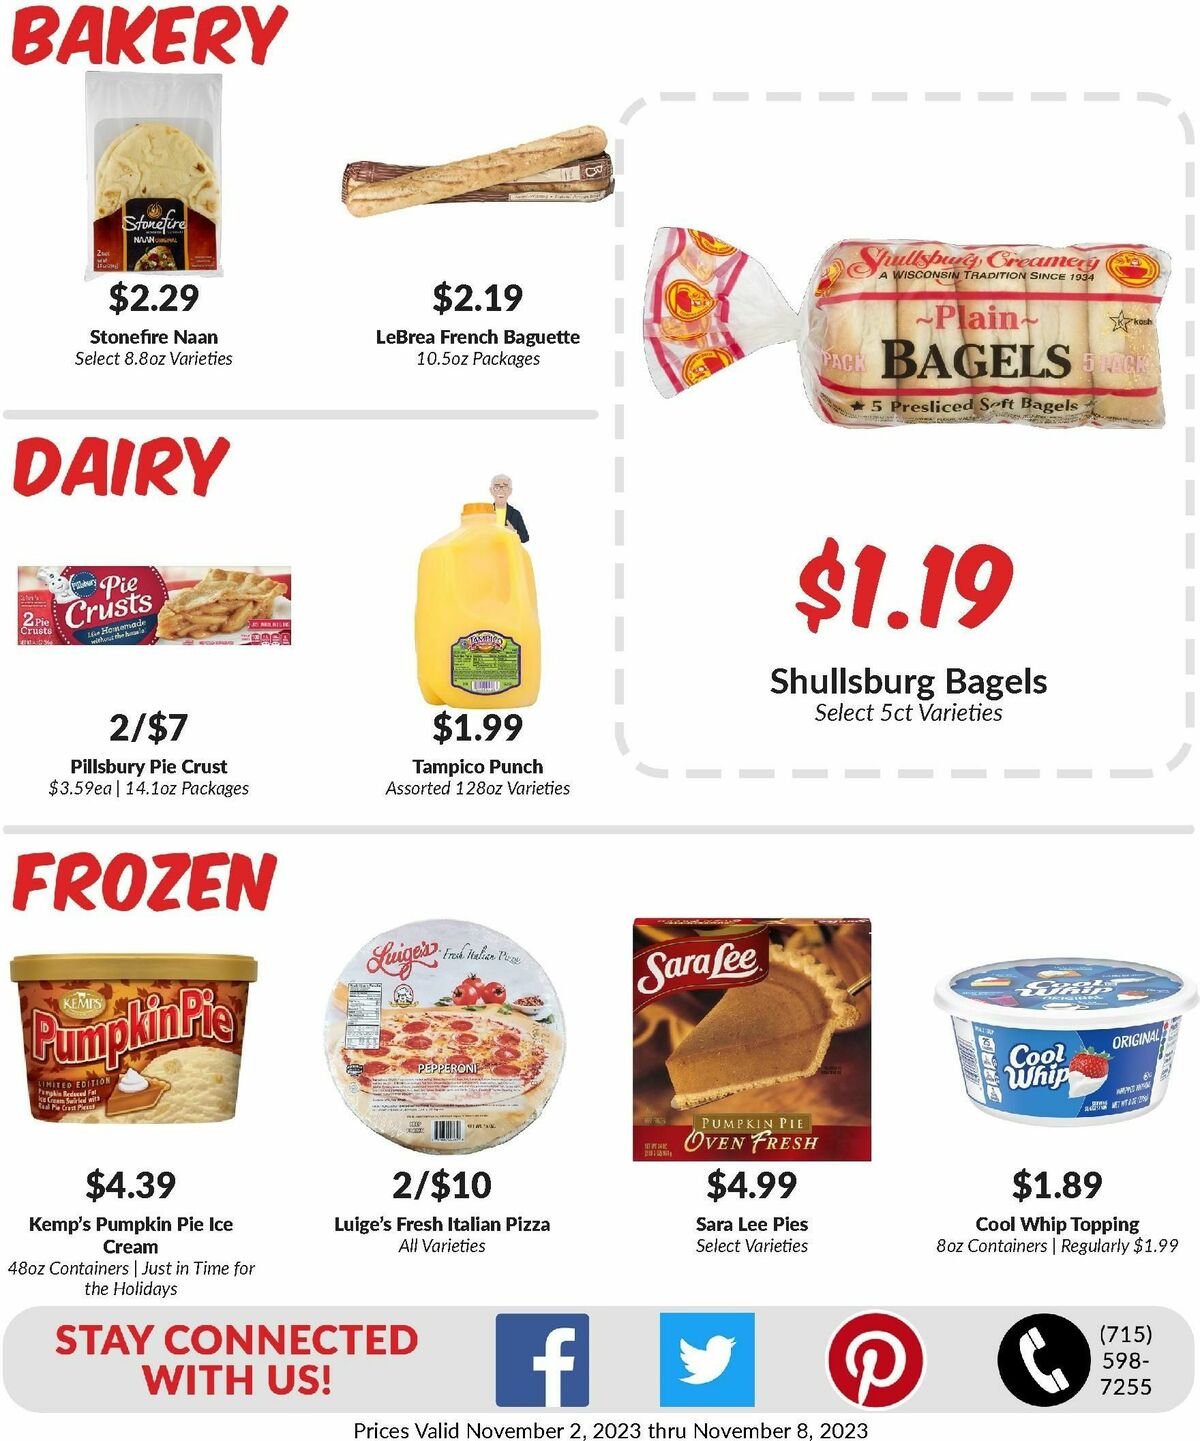 Woodmans Food Market Weekly Ad from November 2